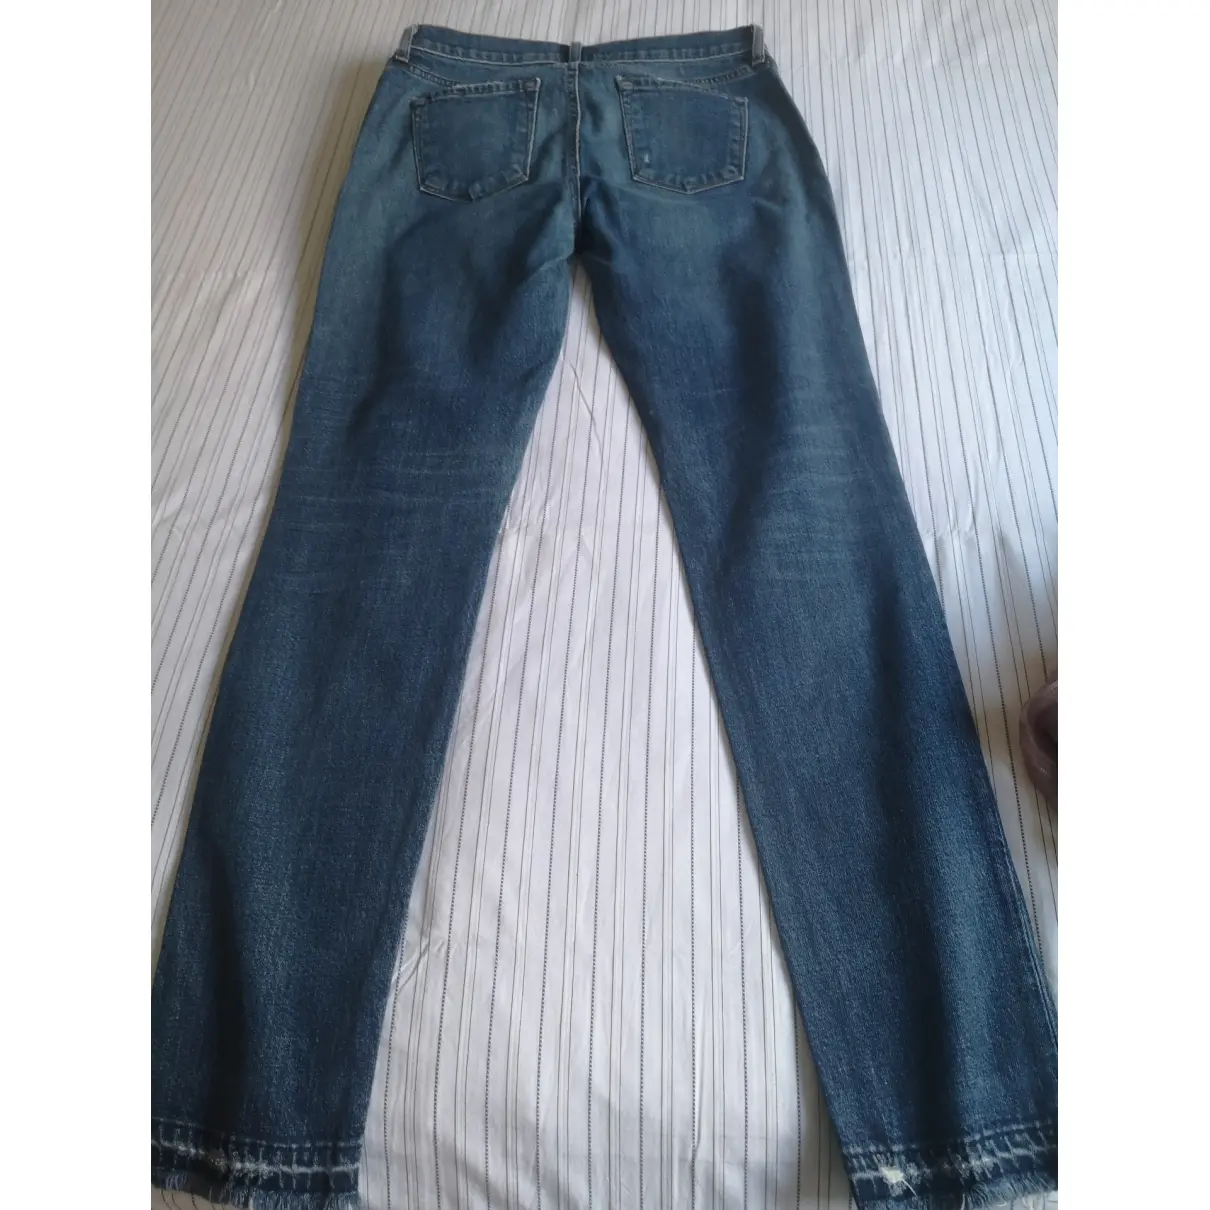 J Brand Slim jeans for sale